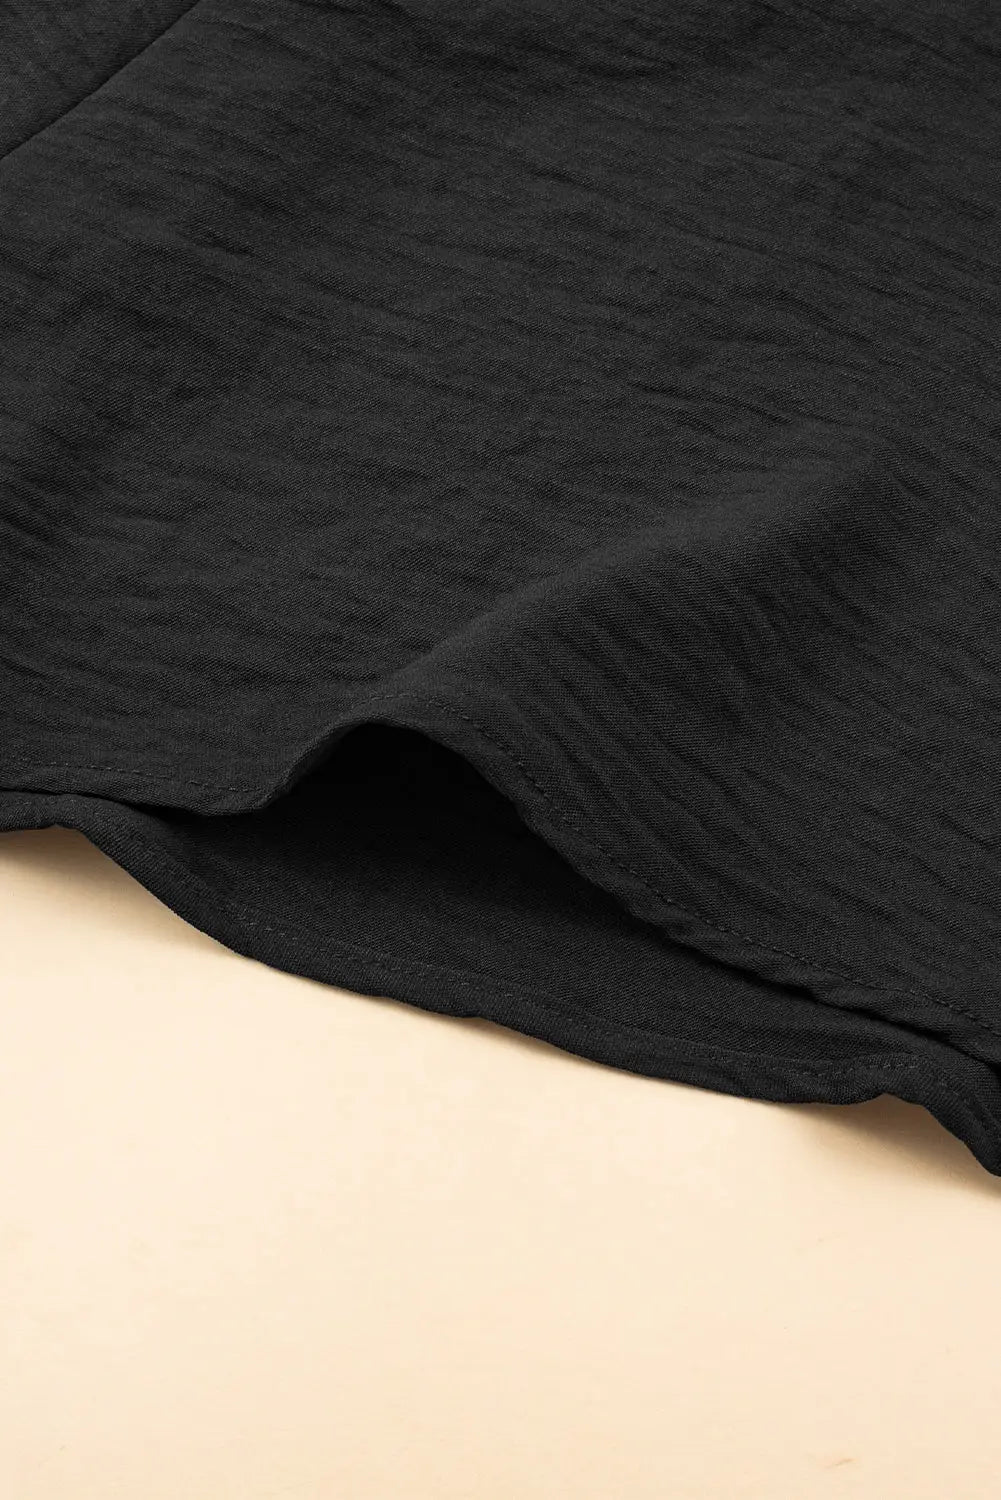 Black backless elastic waist sleeveless romper - bottoms/jumpsuits & rompers